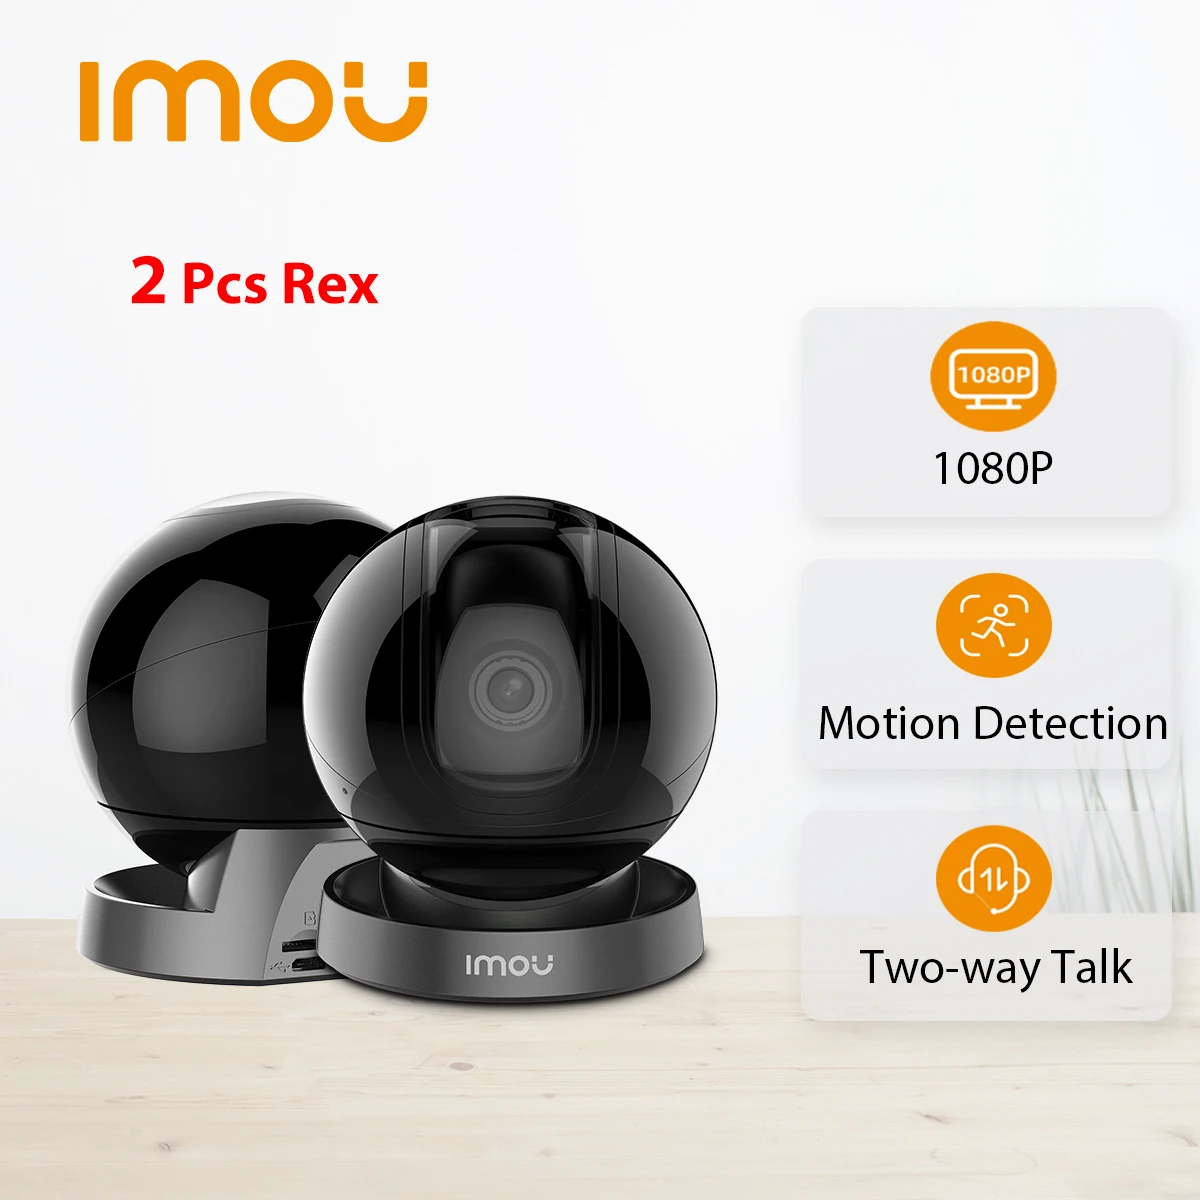 

IMOU 2Pcs REX 2MP Wifi IP Camera 360 indoor AI Human Detection Camera Night Vision PTZ surveillance Smart Home